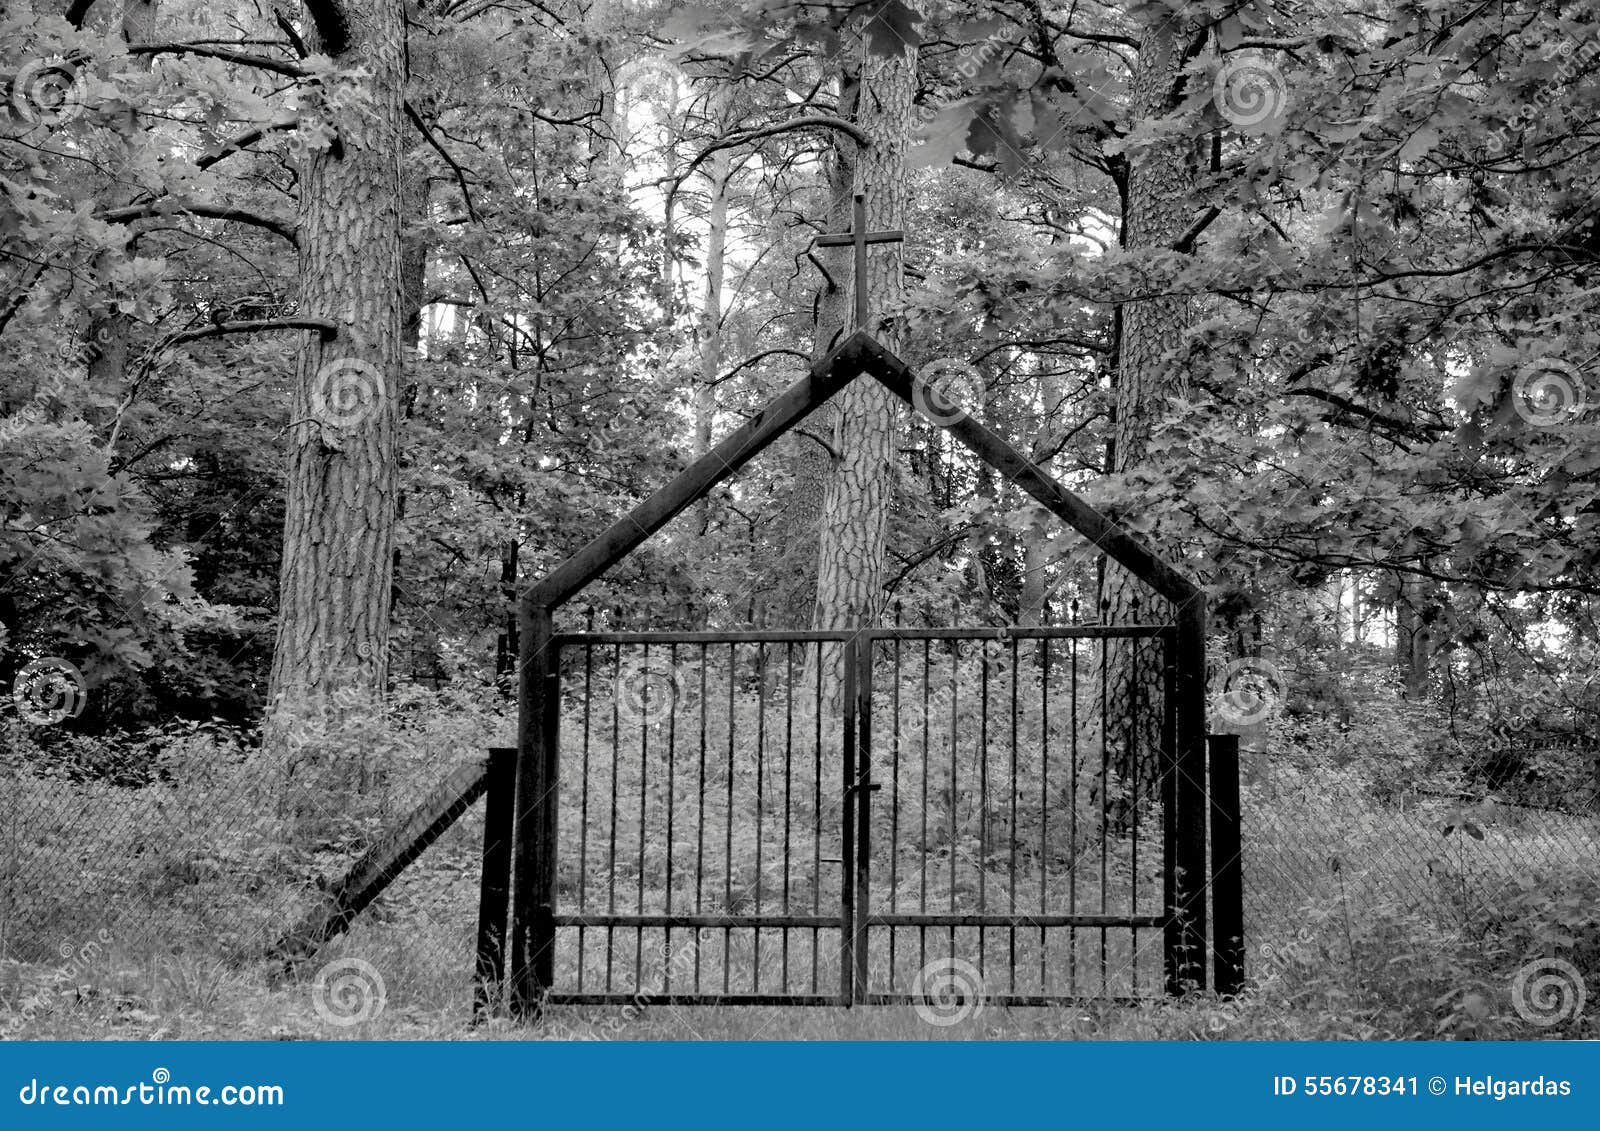 cemetery gates clipart - photo #46